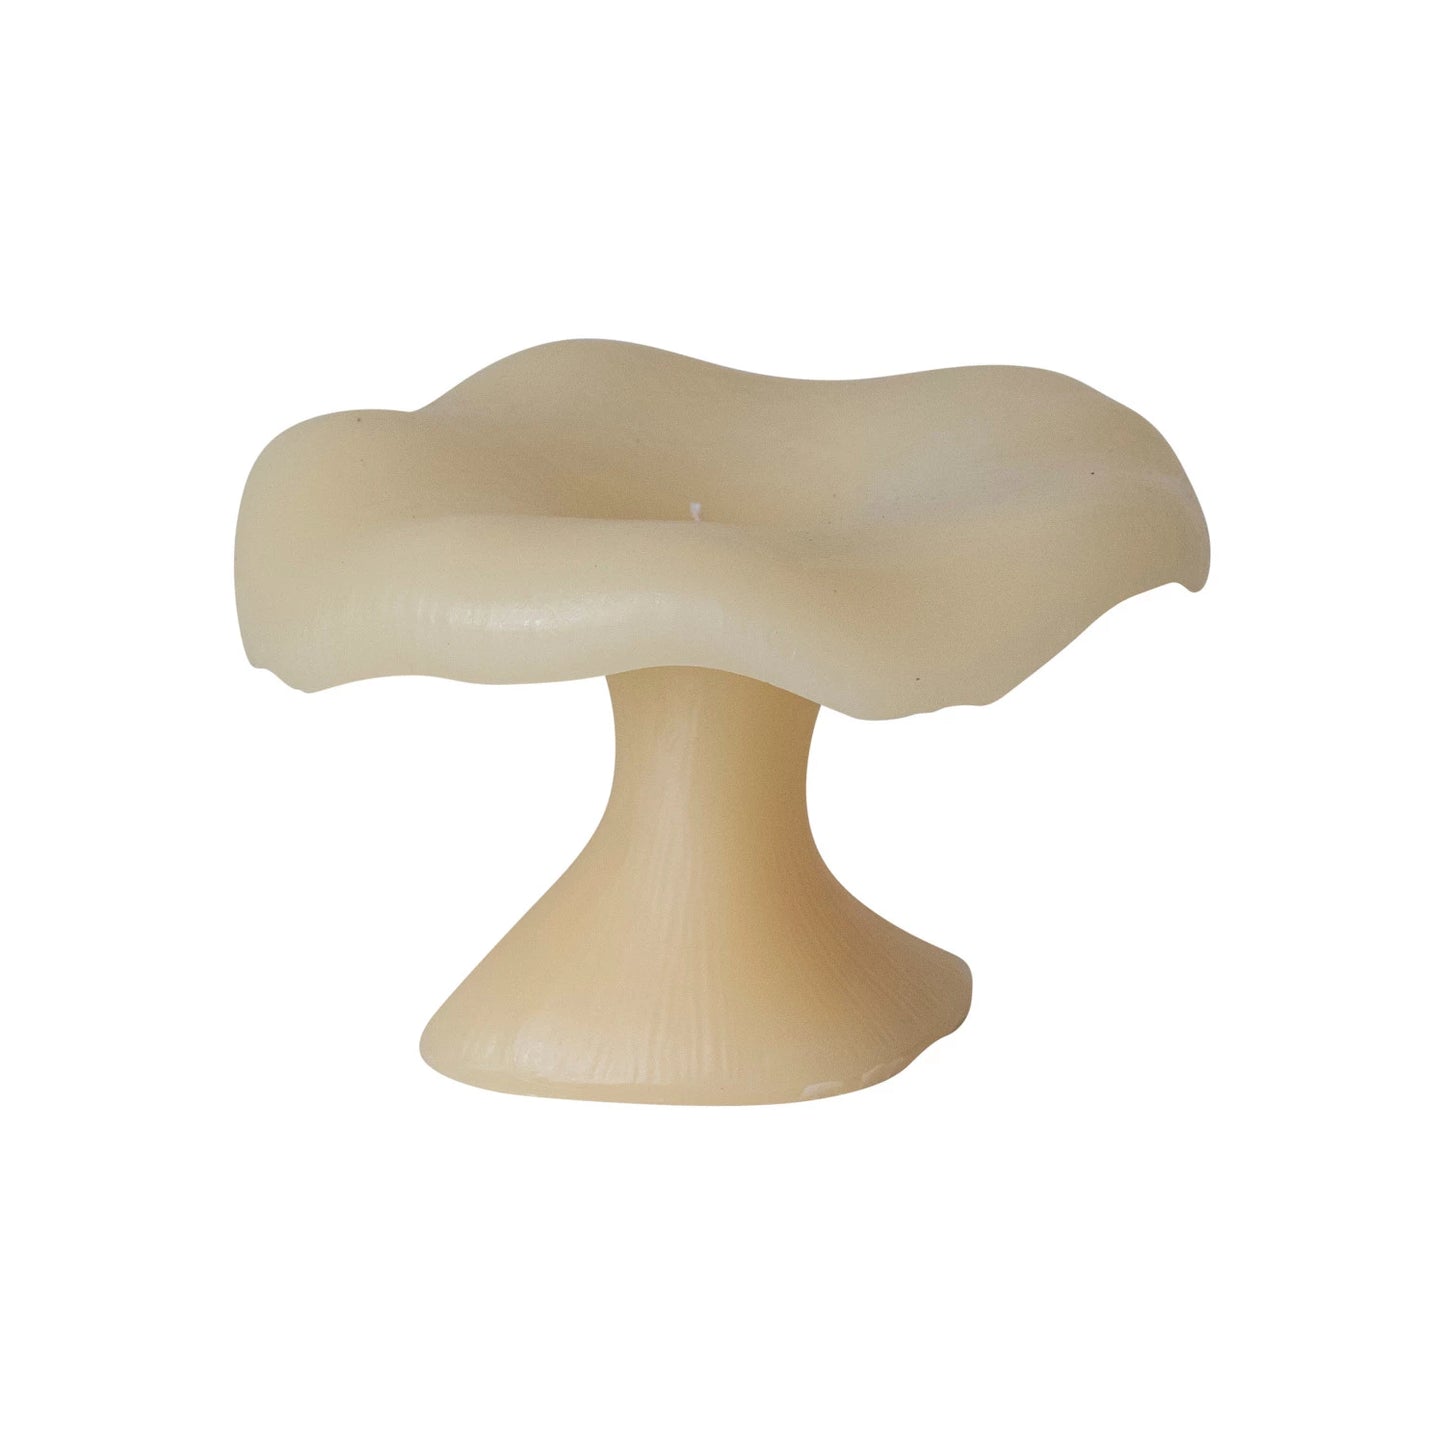 Mushroom Shaped Candles - Large Individual